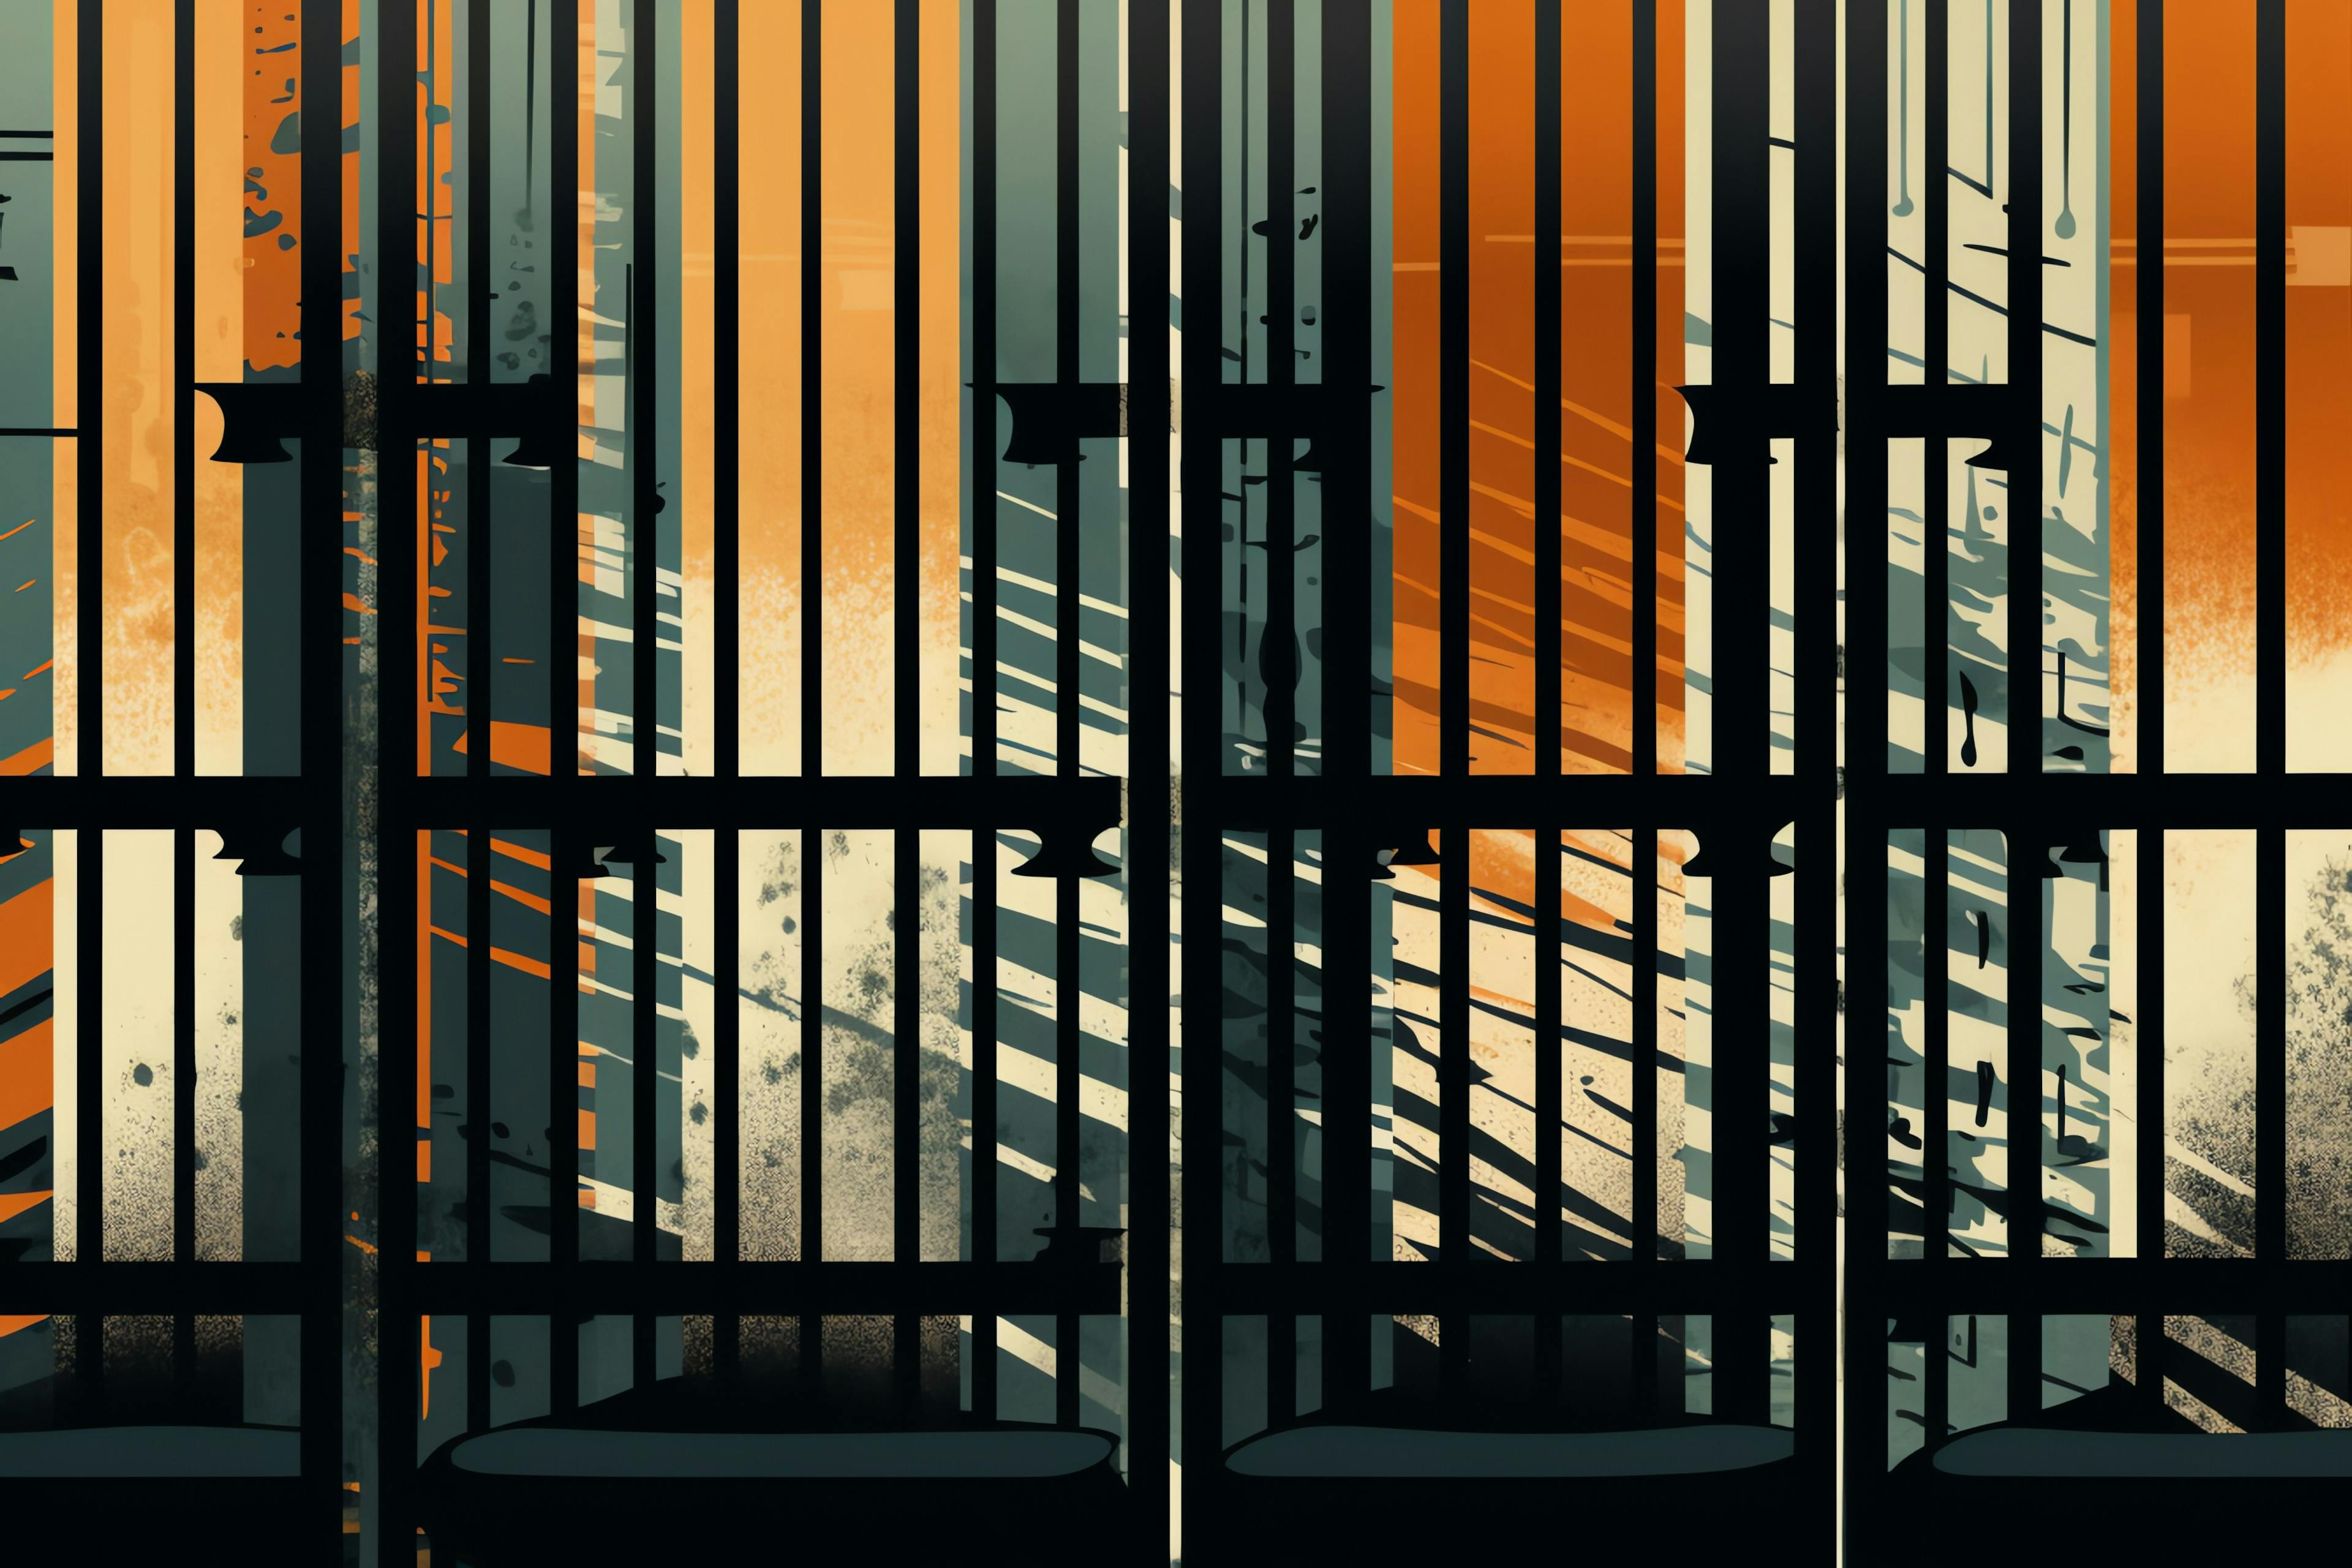 Prison Bars Model | image credit: Hatia - stock.adobe.com